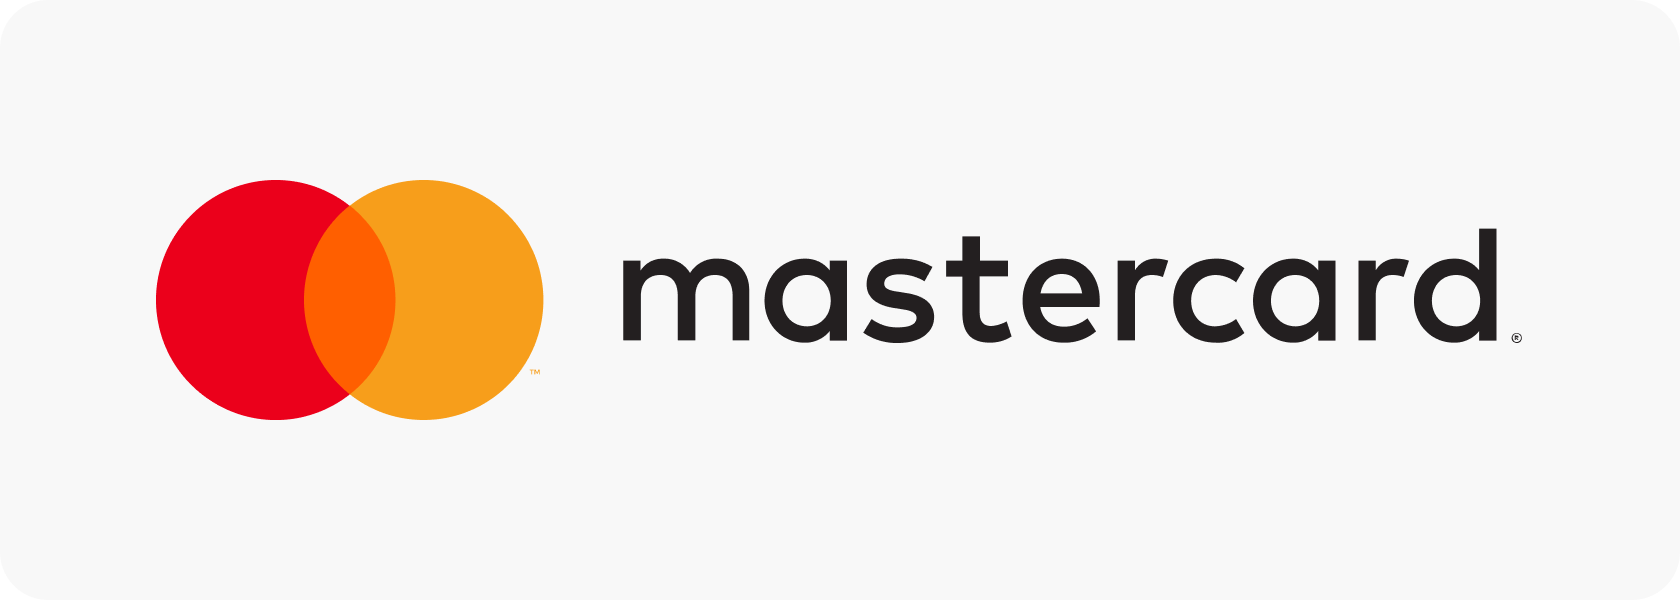 Mastercard-02